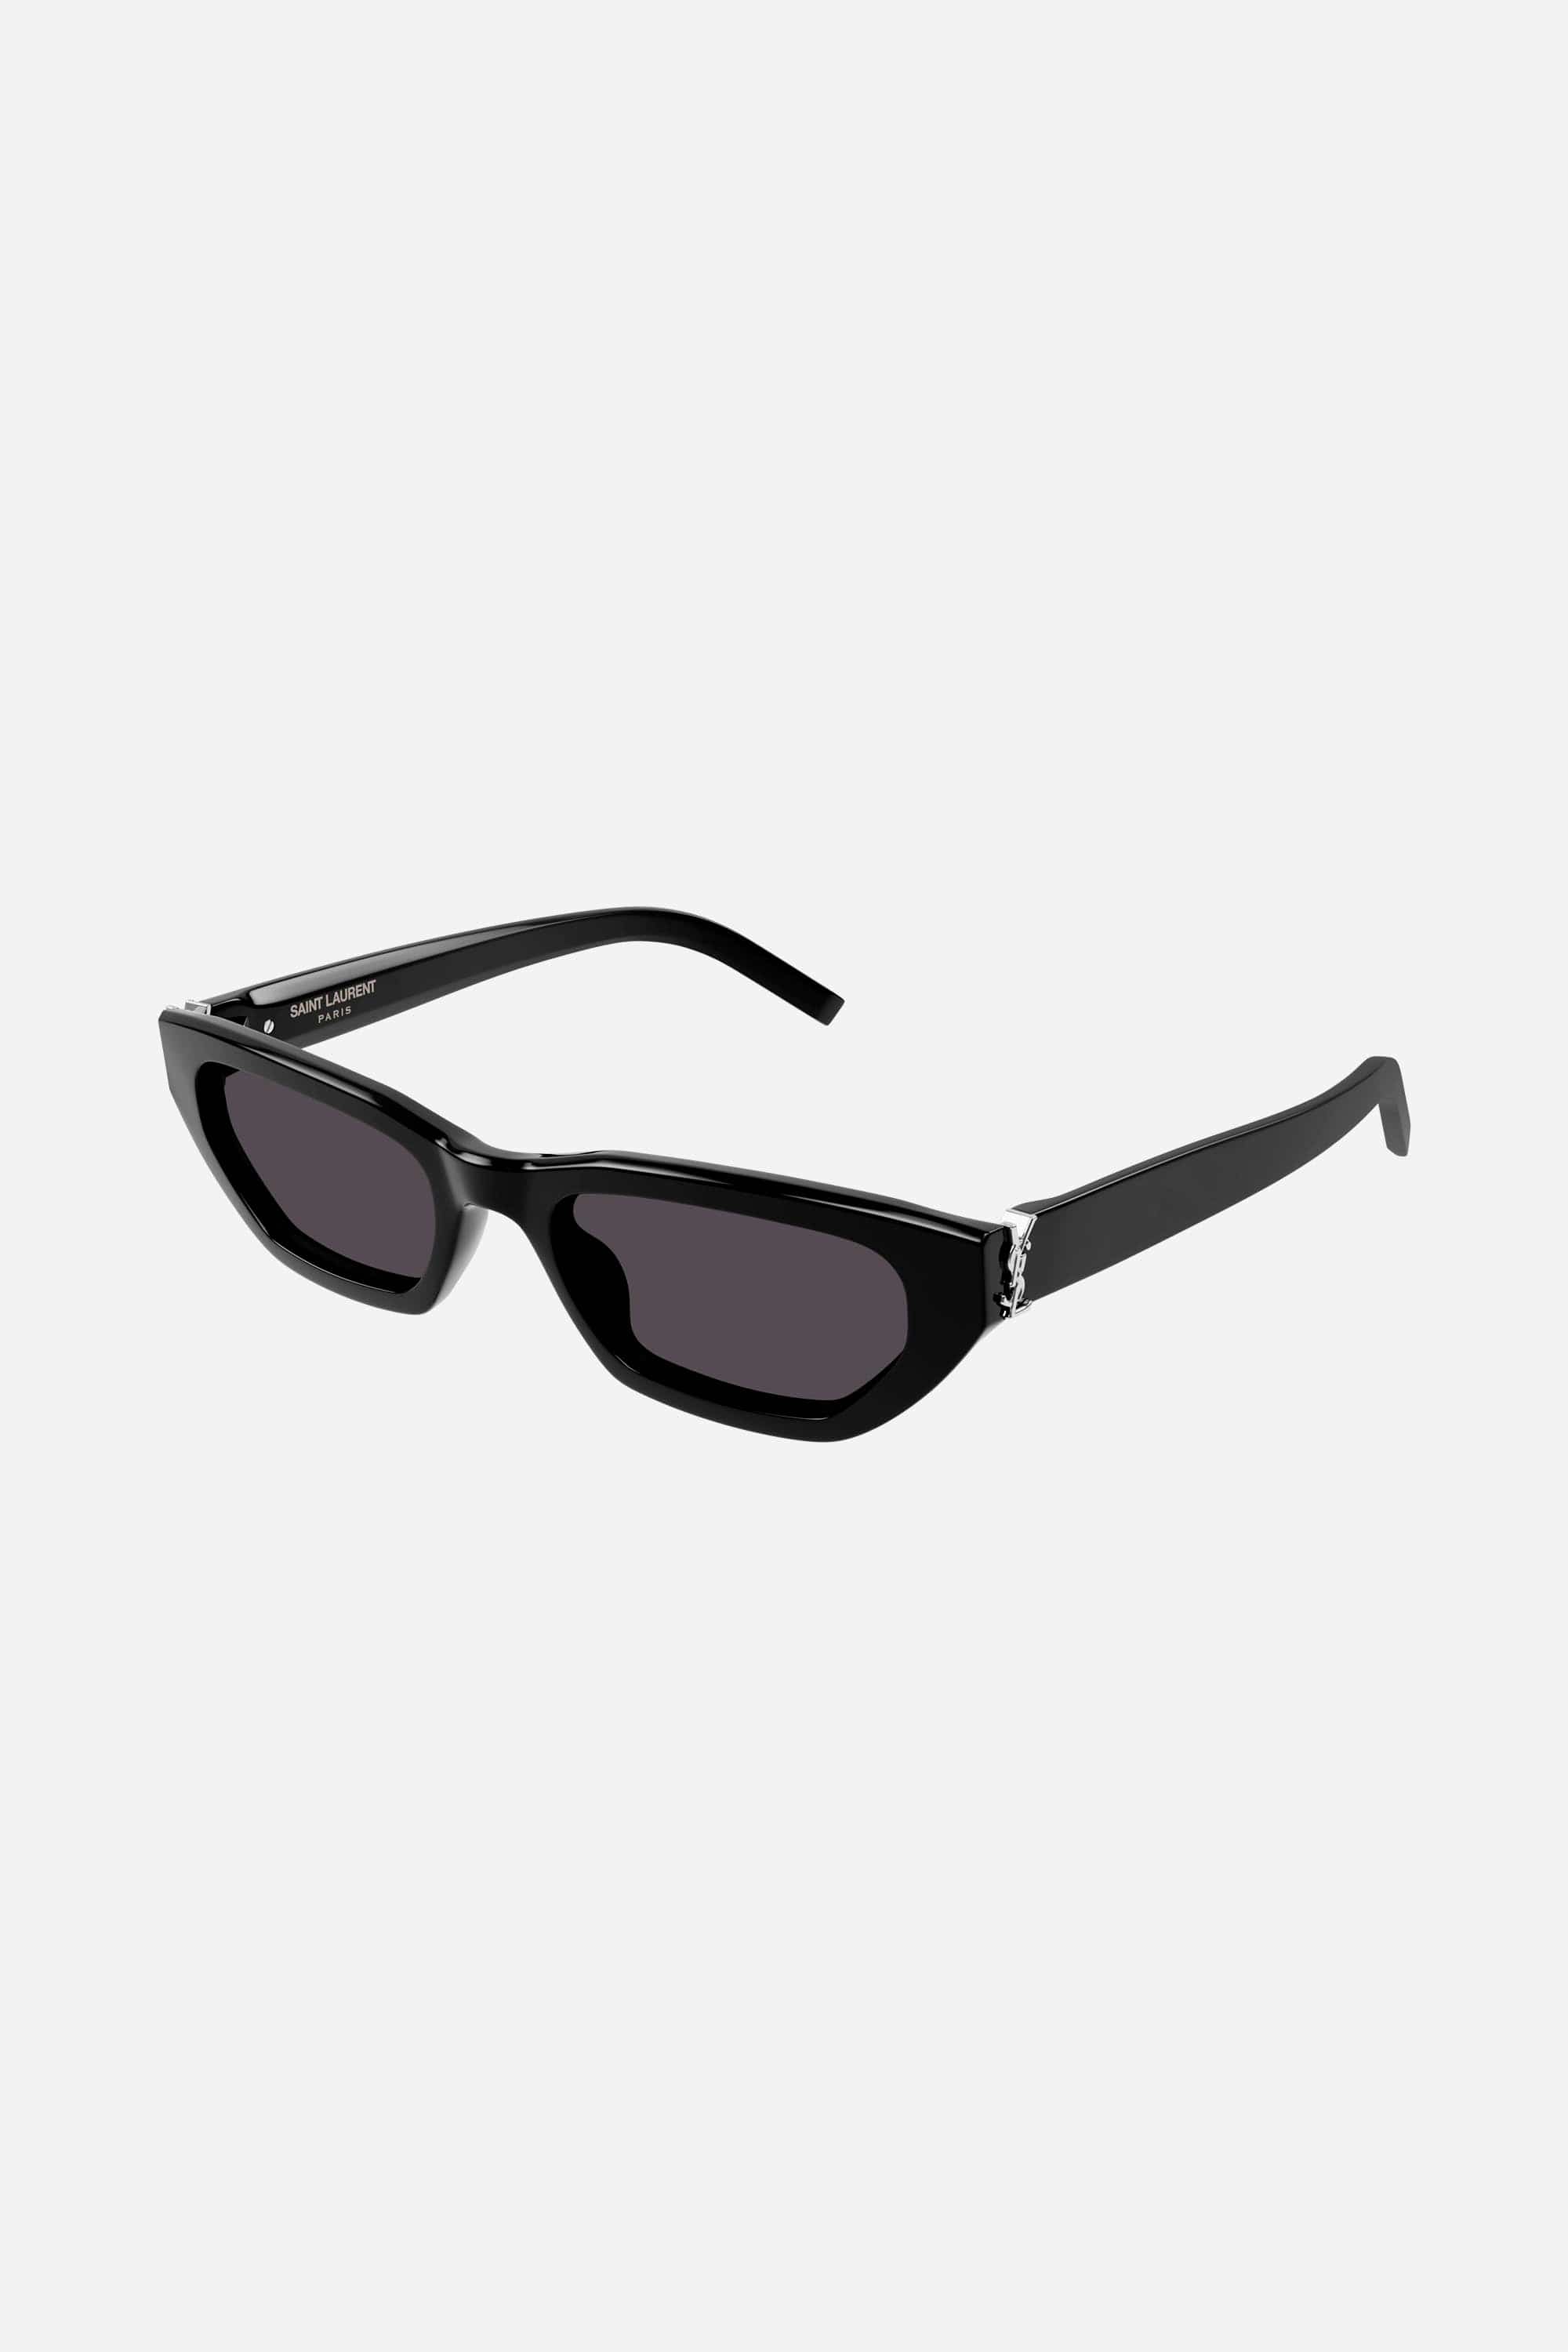 Saint Laurent black micro shade featuring YSL logo - Eyewear Club